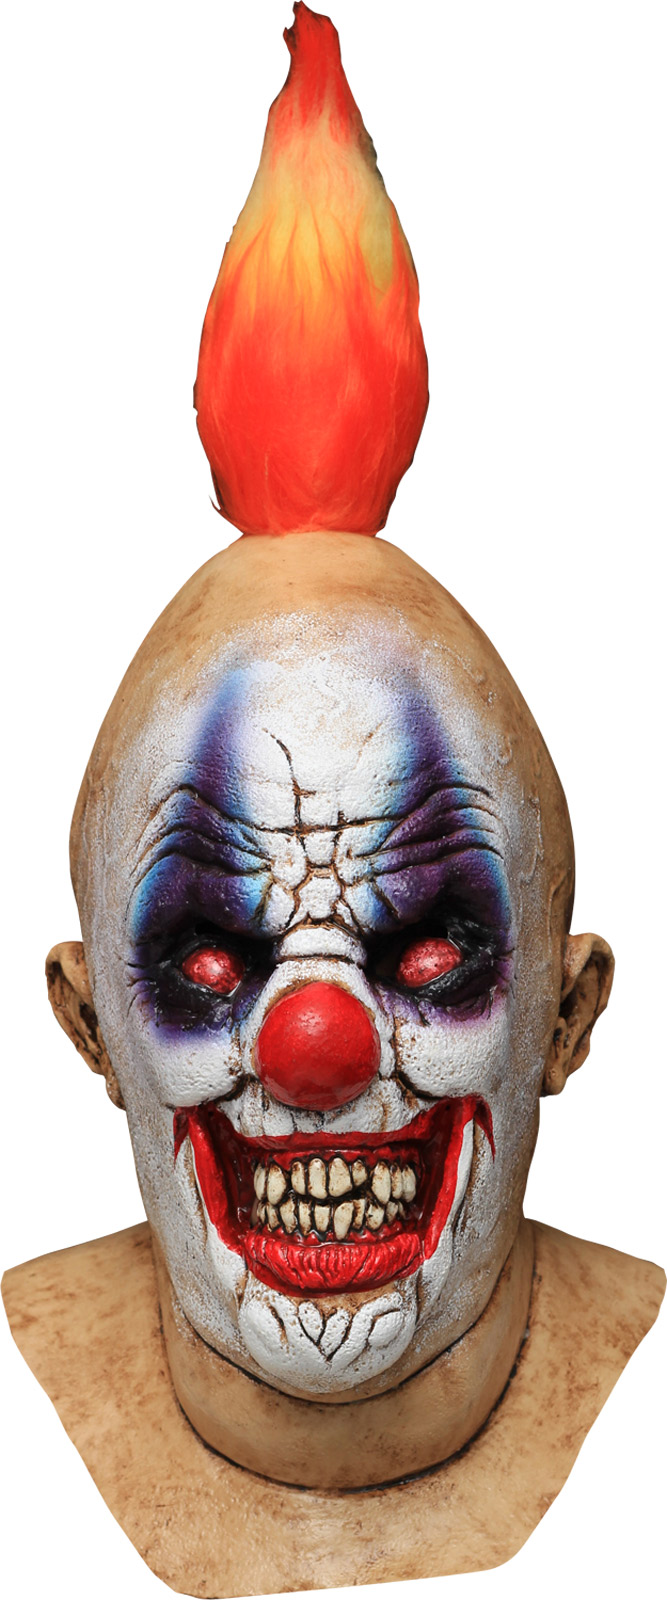 Squancho der Clown Maske Horror Halloween Kostümaccessoire hautfarben-bunt